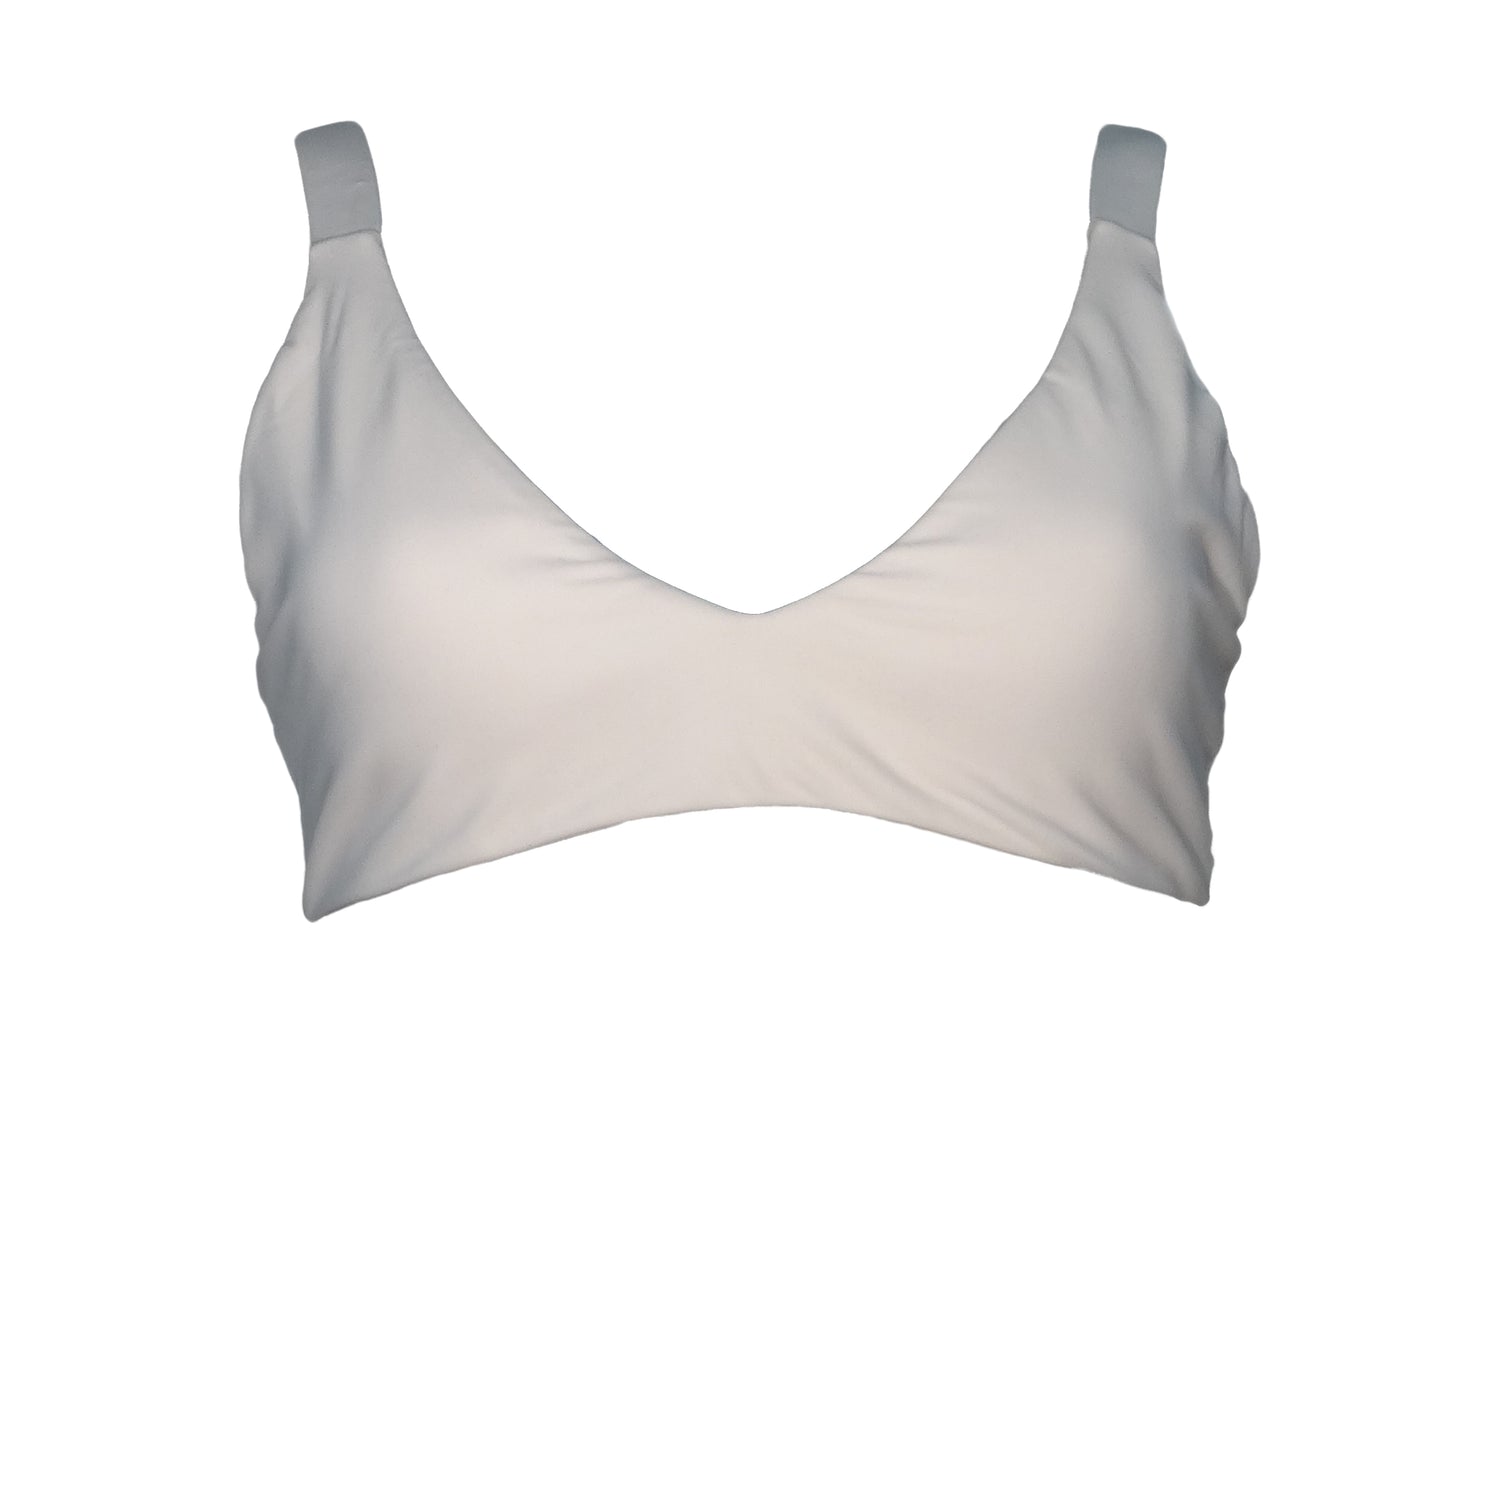 White bralette bikini top with plunging v-neck, wide shoulder straps, and gold belt buckle back closure. 